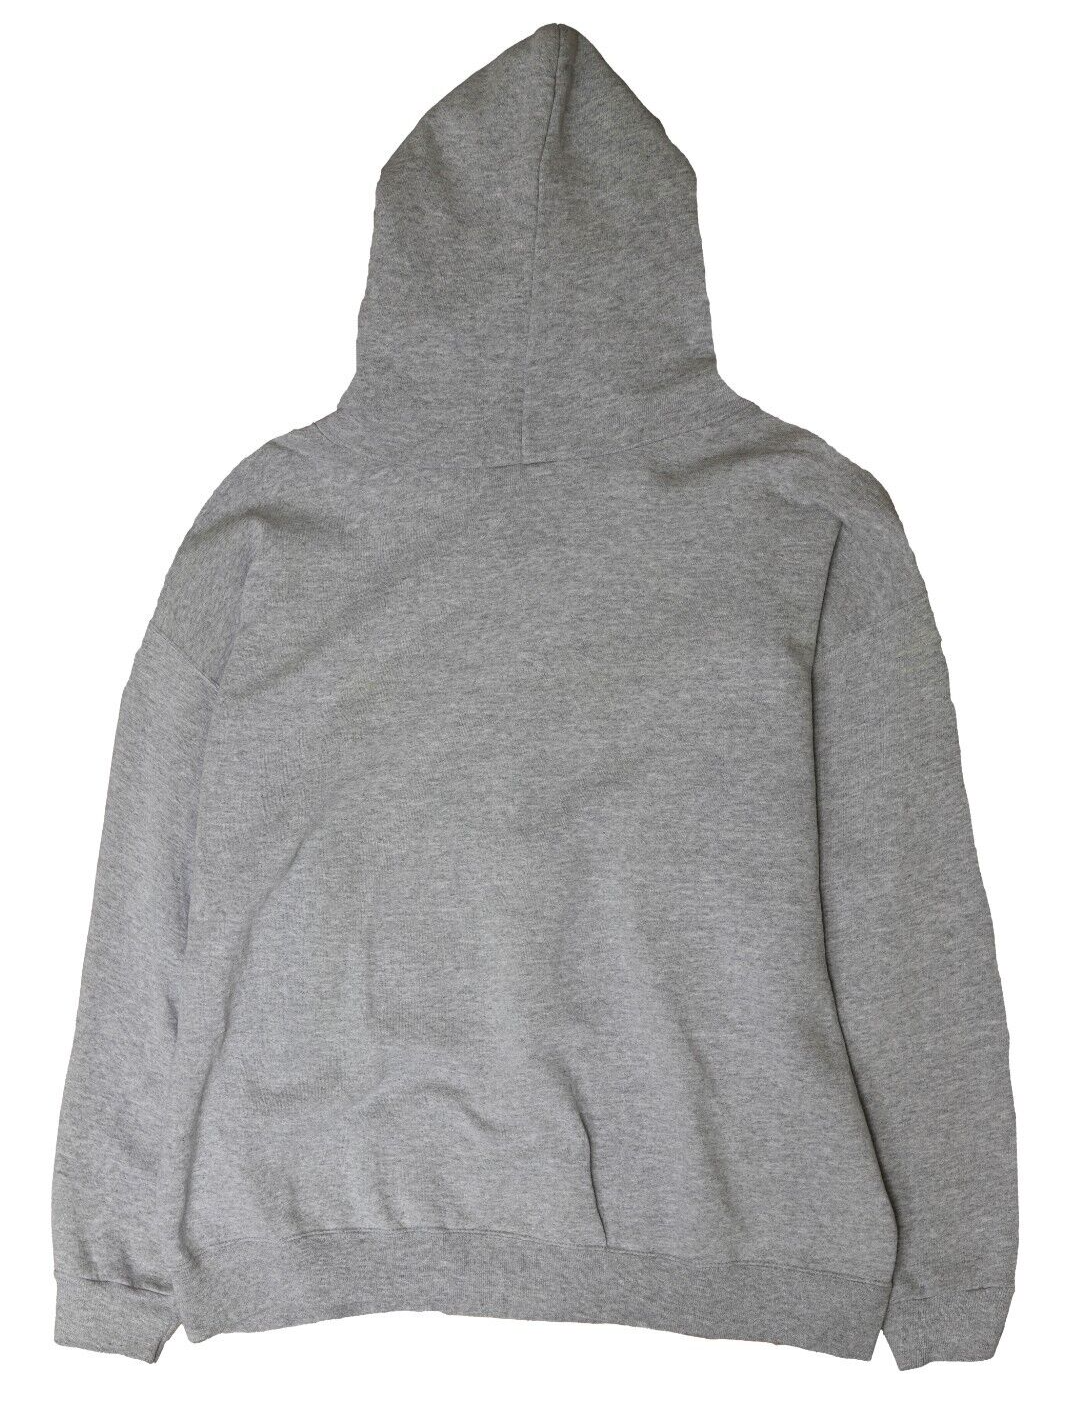 Vintage Nike Sweatshirt Hoodie Size Large Gray Embroidered Swoosh 90s